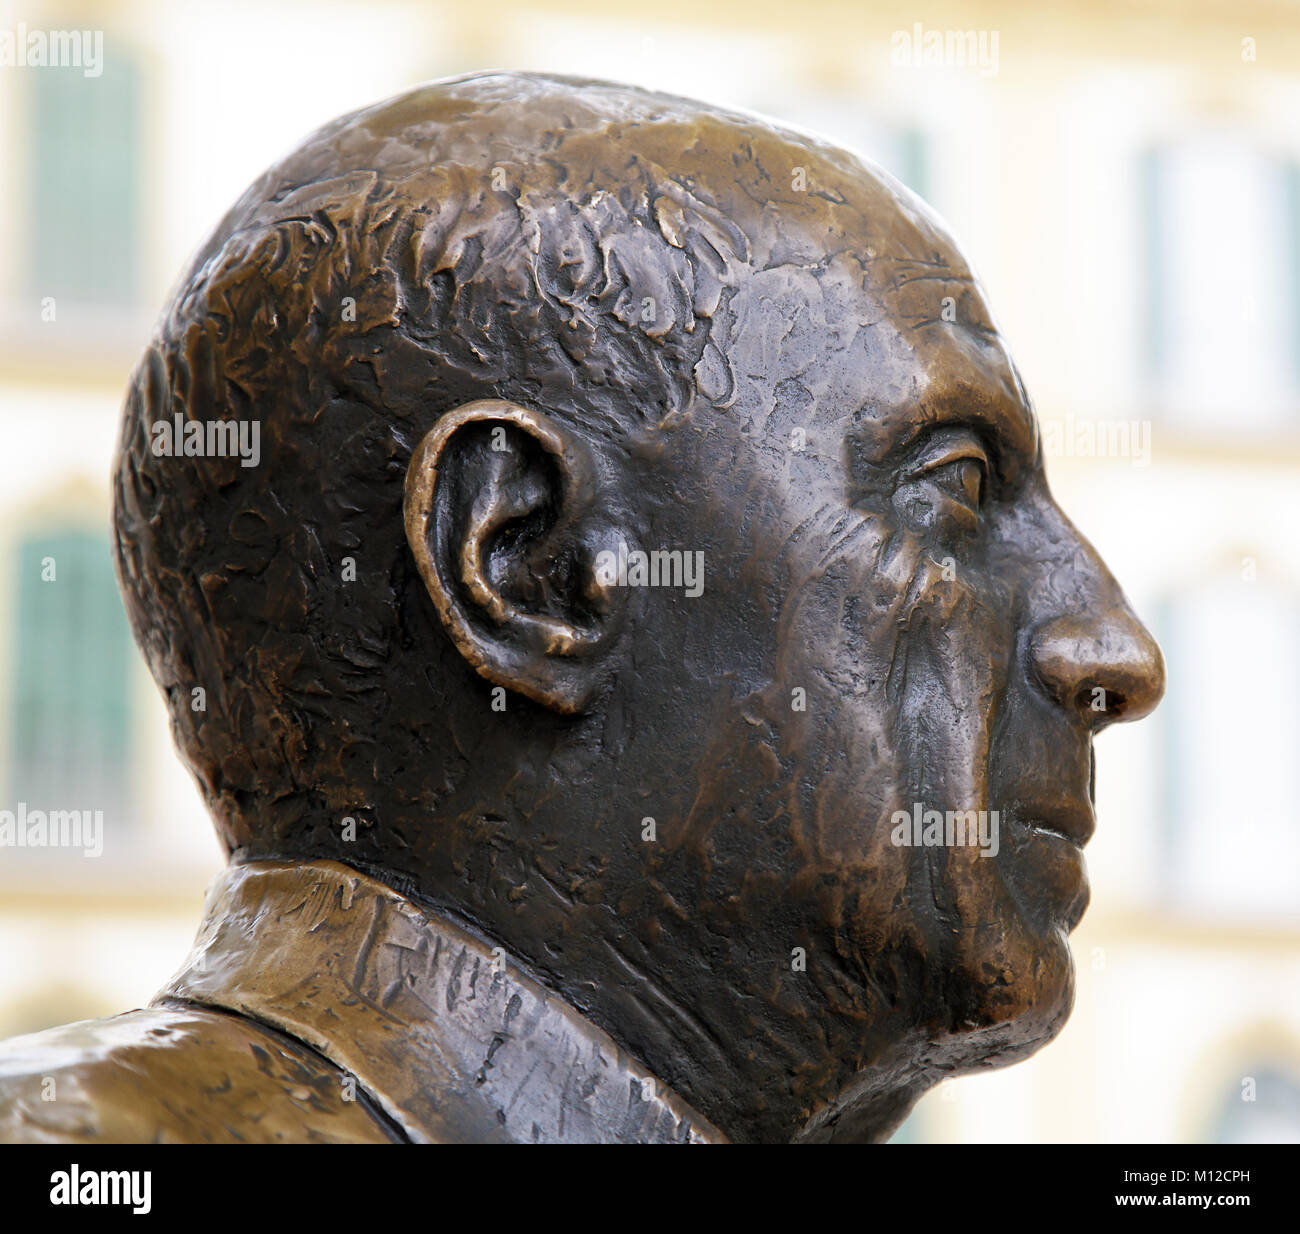 Pablo Picasso Statue.made by sculptor Francisco Lopez Hernandez at Plaza de la Merced Malaga Spain Stock Photo